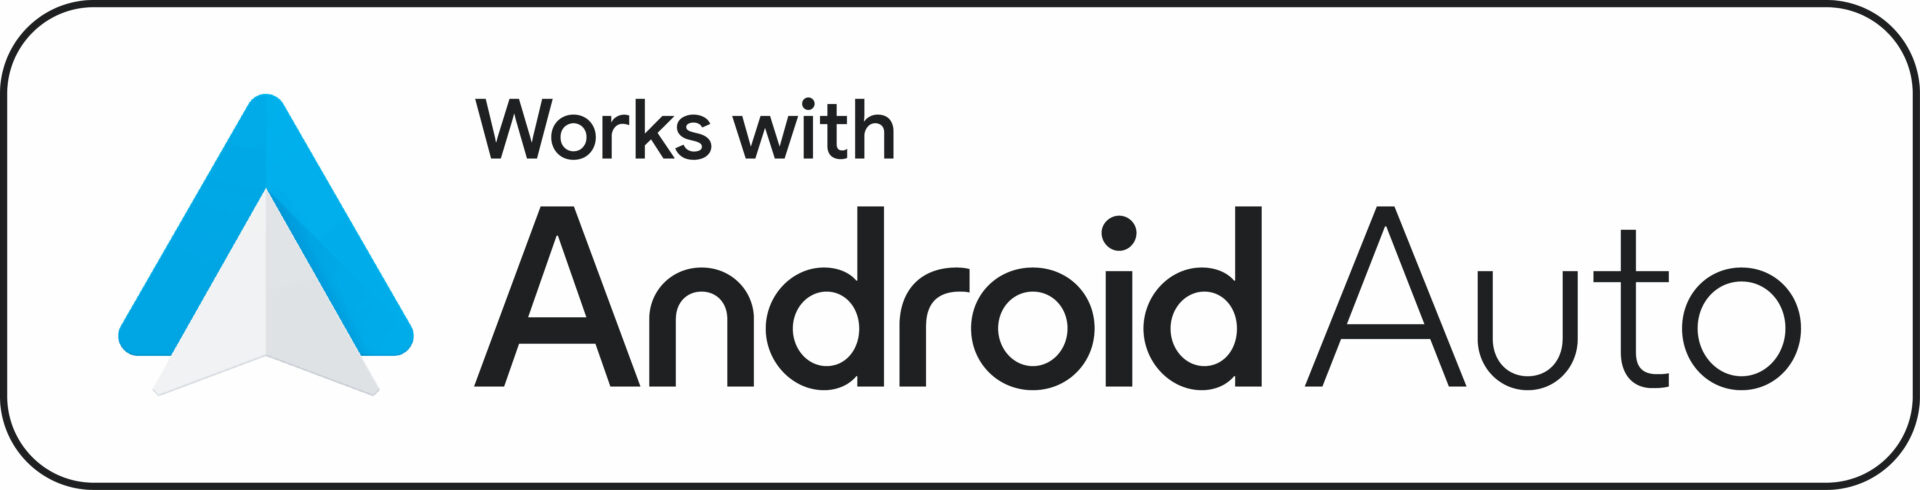 androidauto official logo